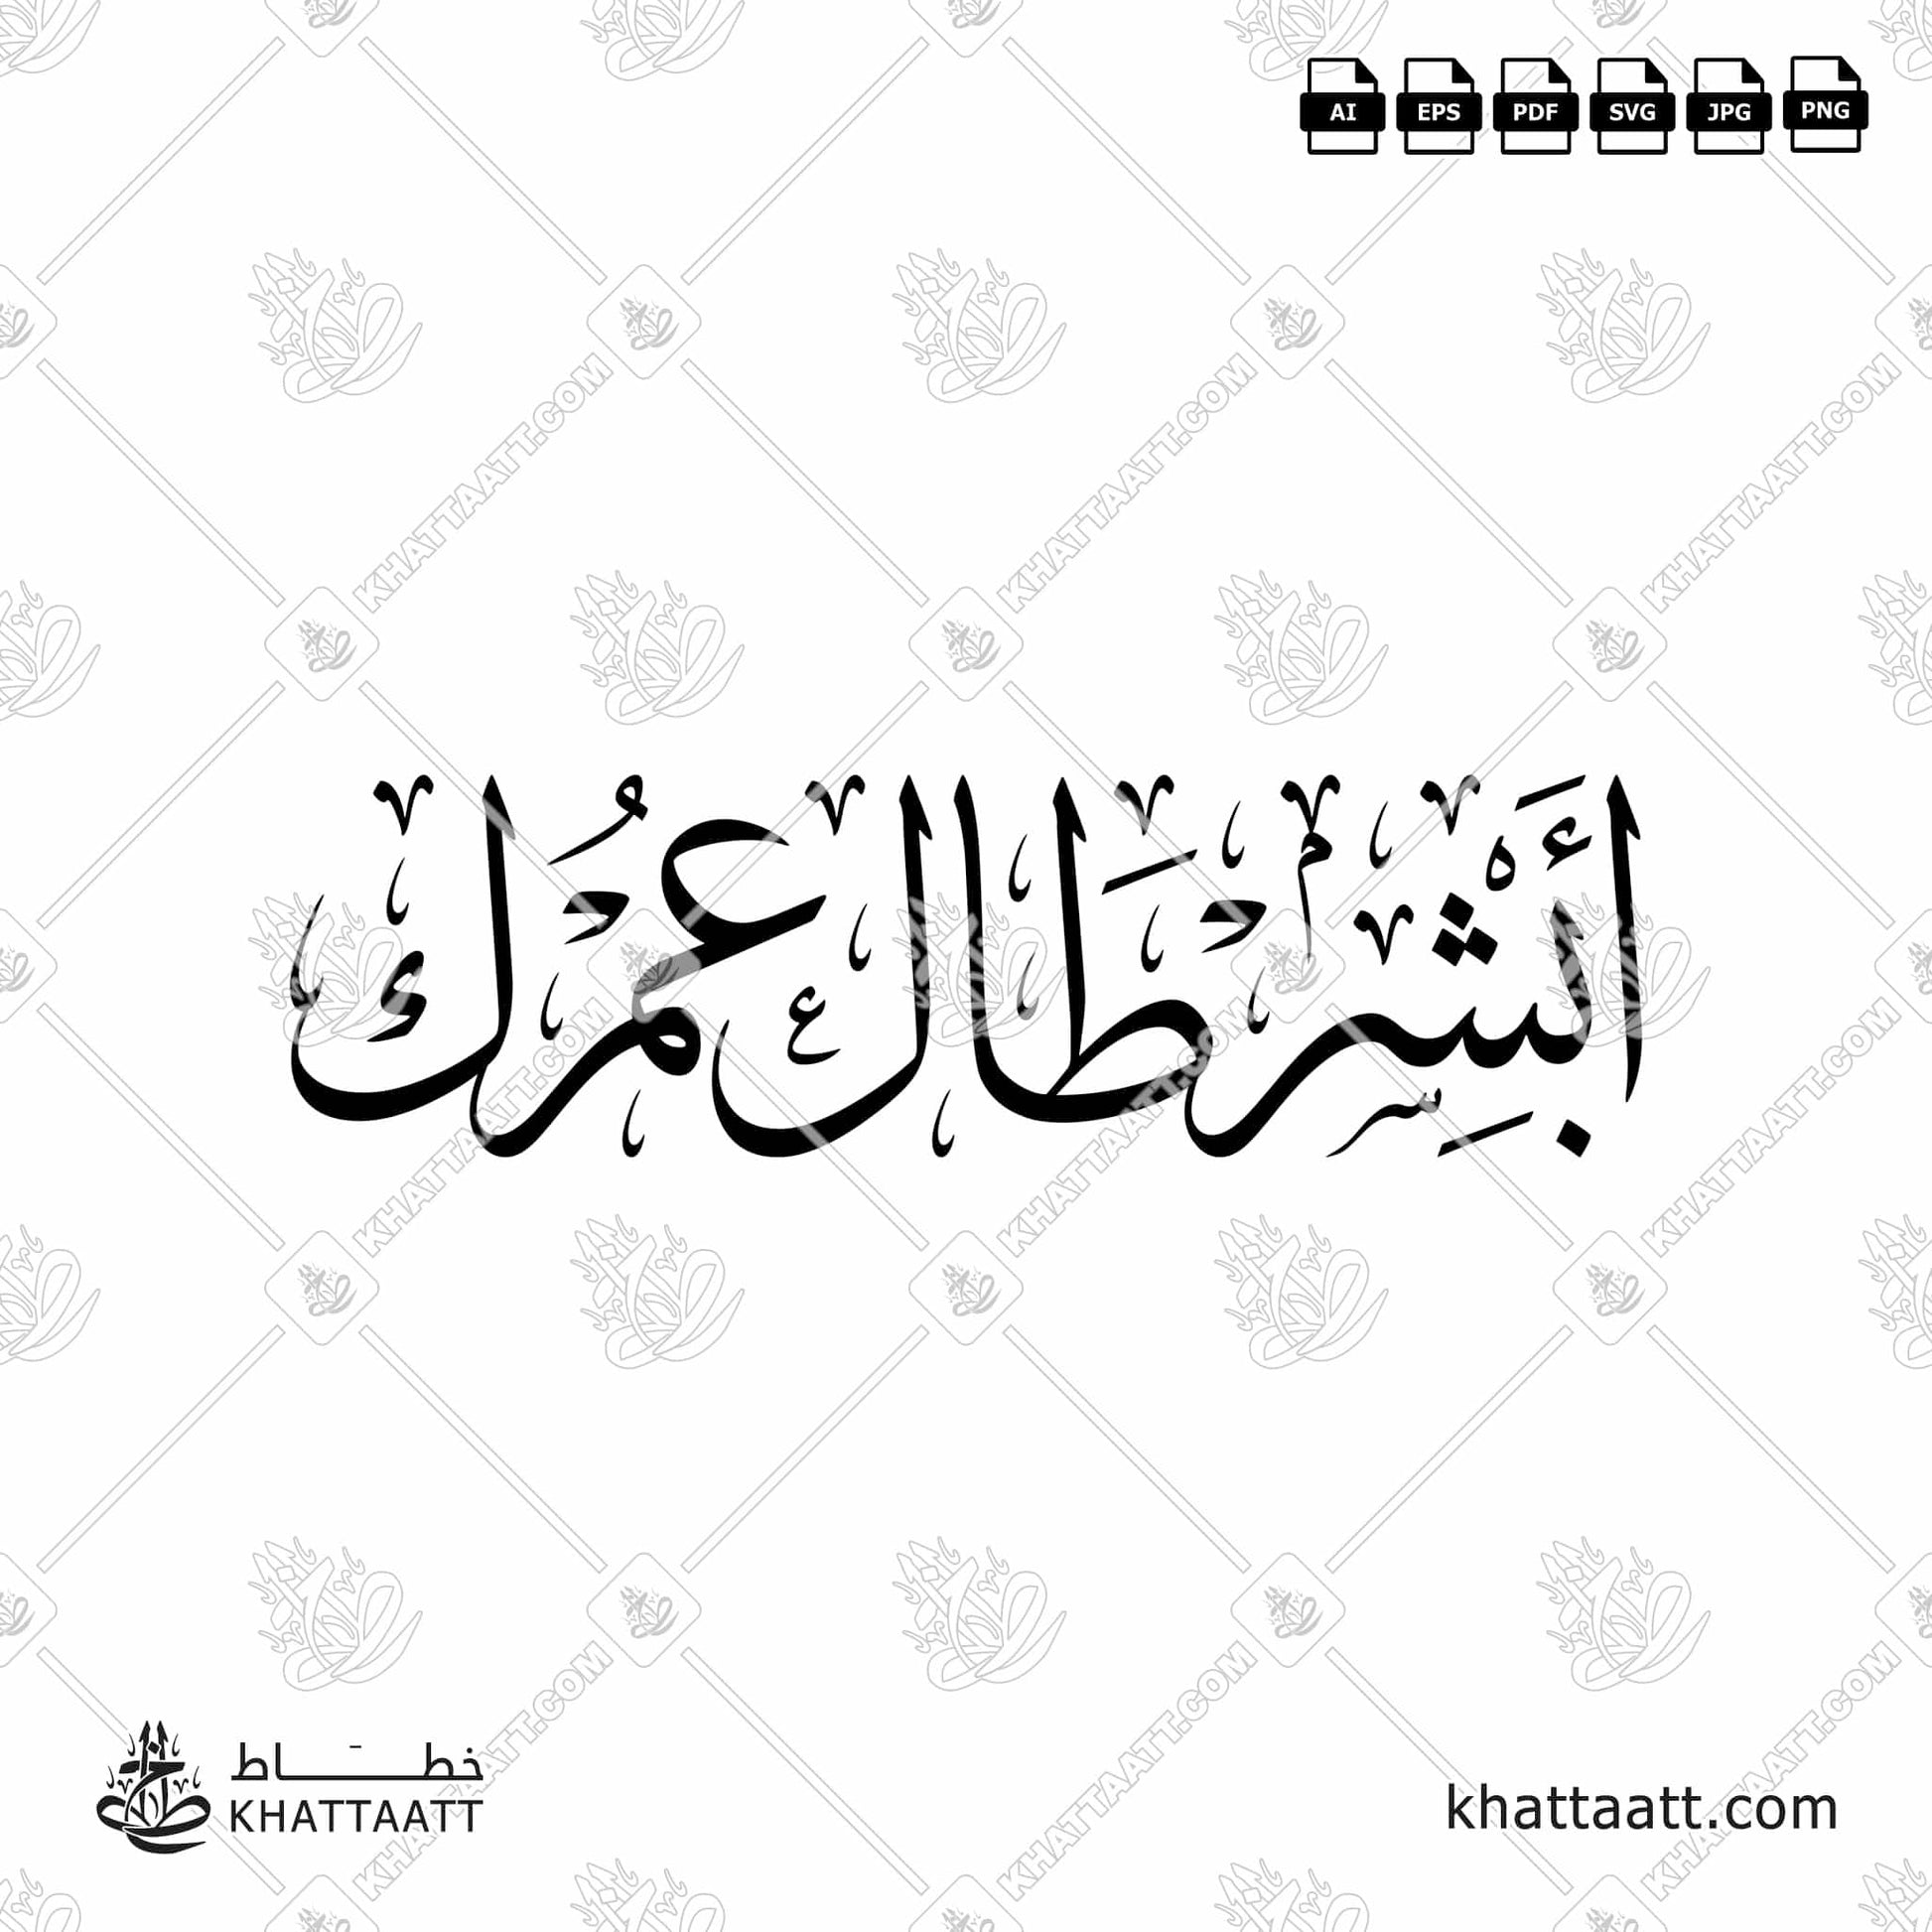 Arabic Calligraphy of أبشر طال عمرك in Thuluth Script خط الثلث.